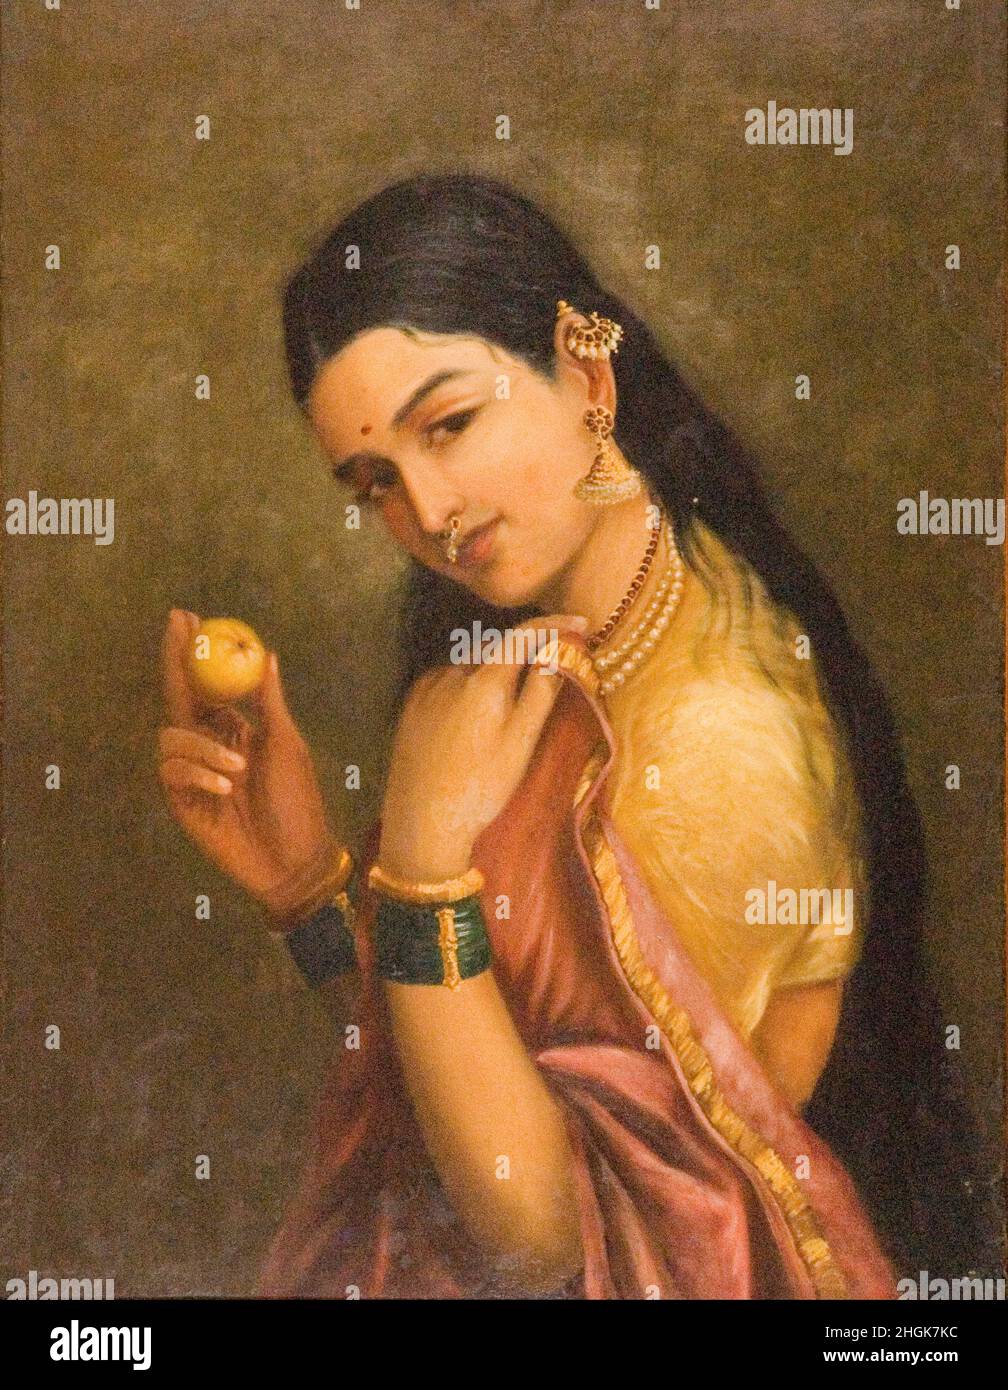 Raja Ravi Varma - Woman Holding a Fruit Stock Photo